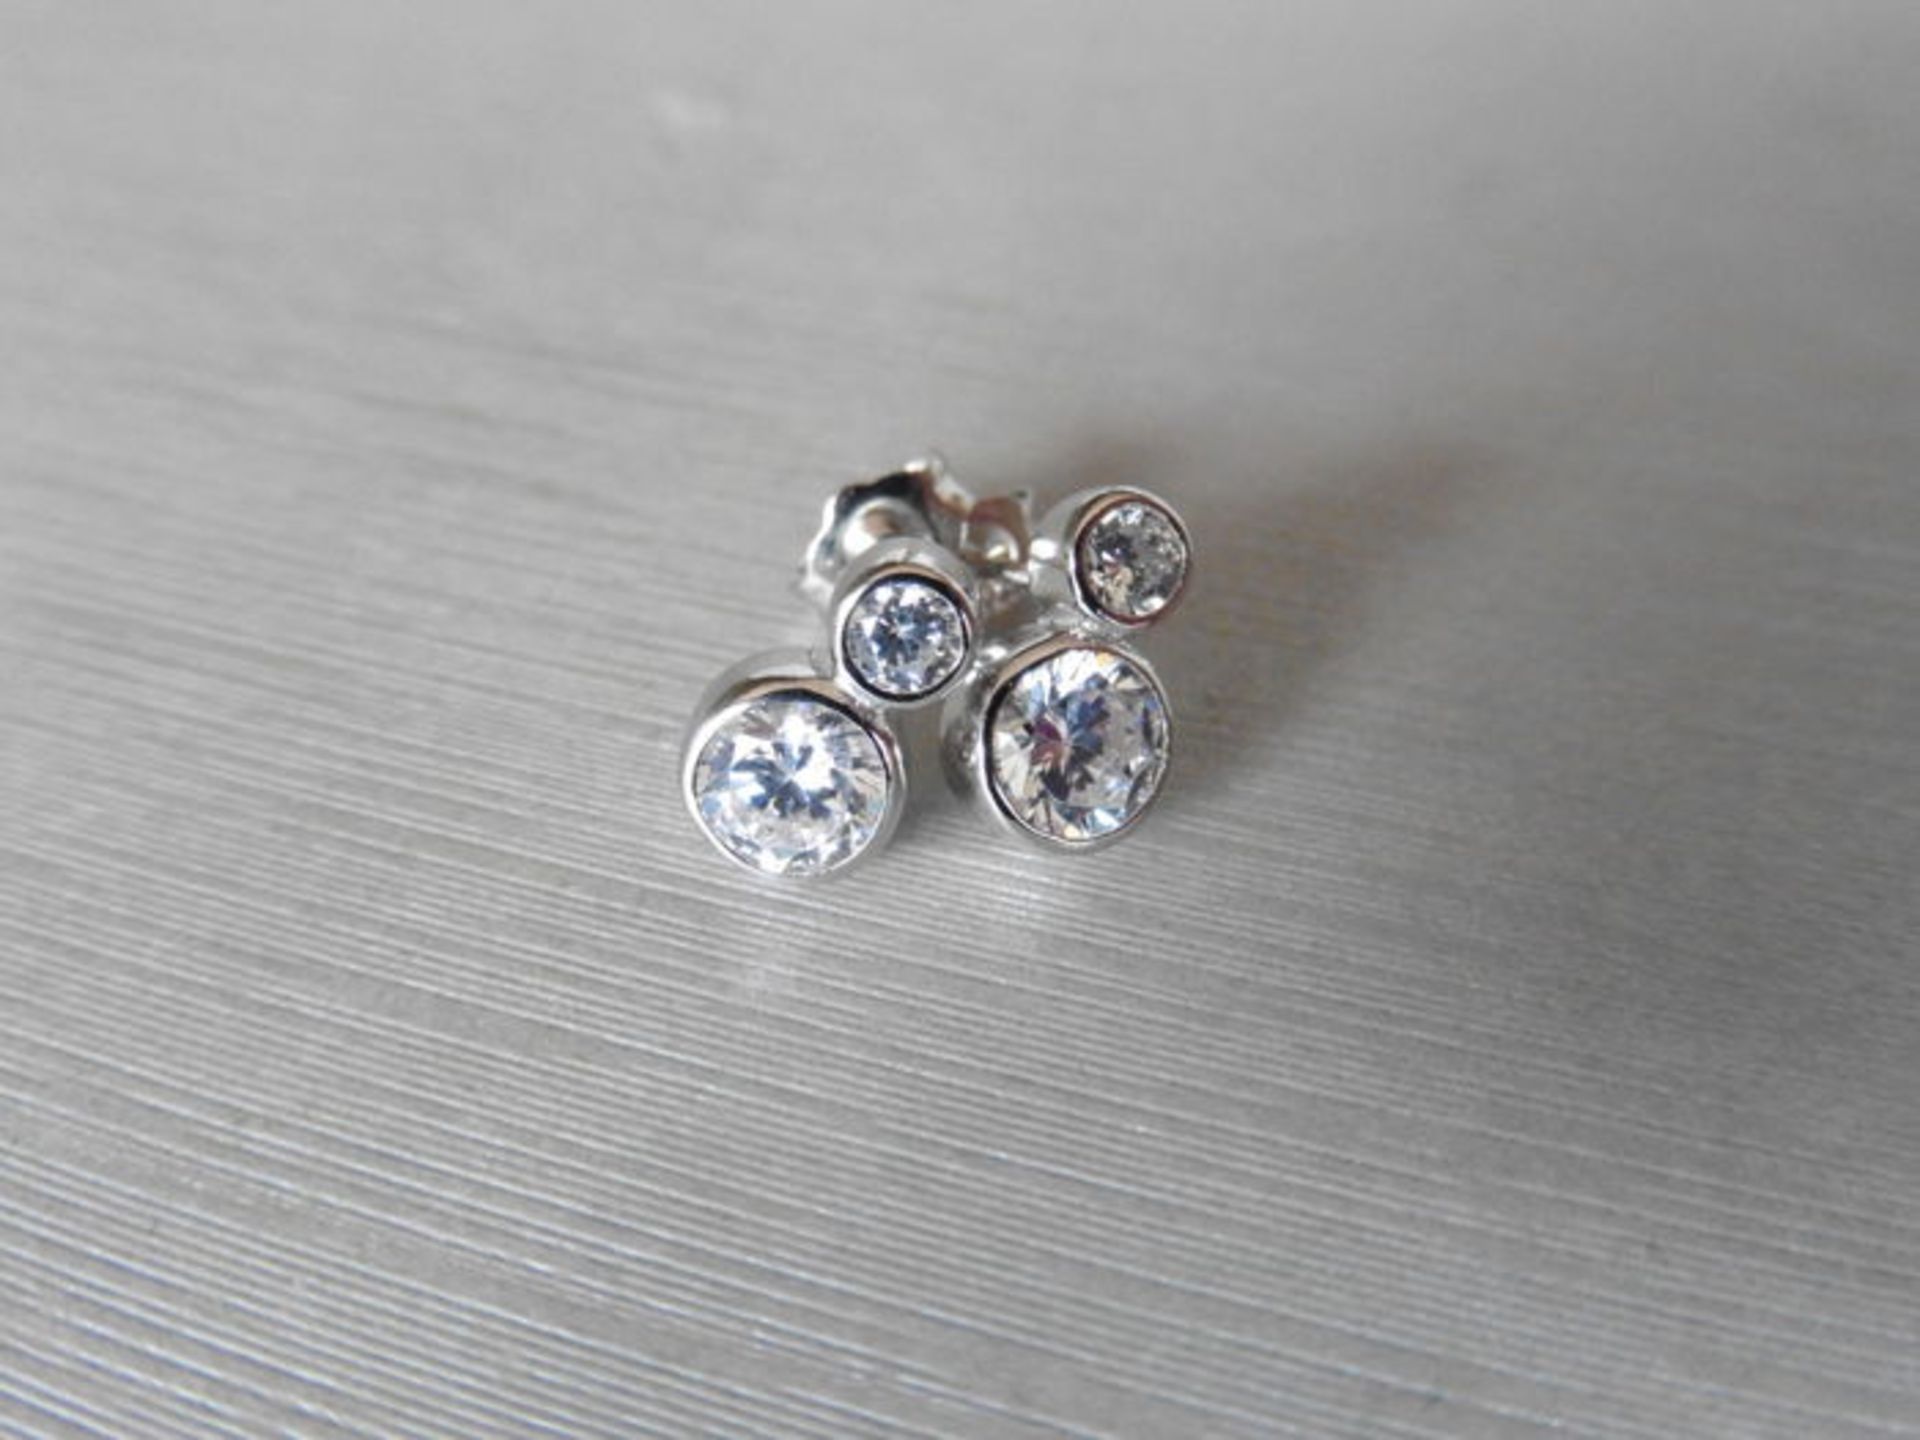 0.80ct diamond drop earrings each set with 2 graduated brilliant cut diamonds - Image 2 of 3